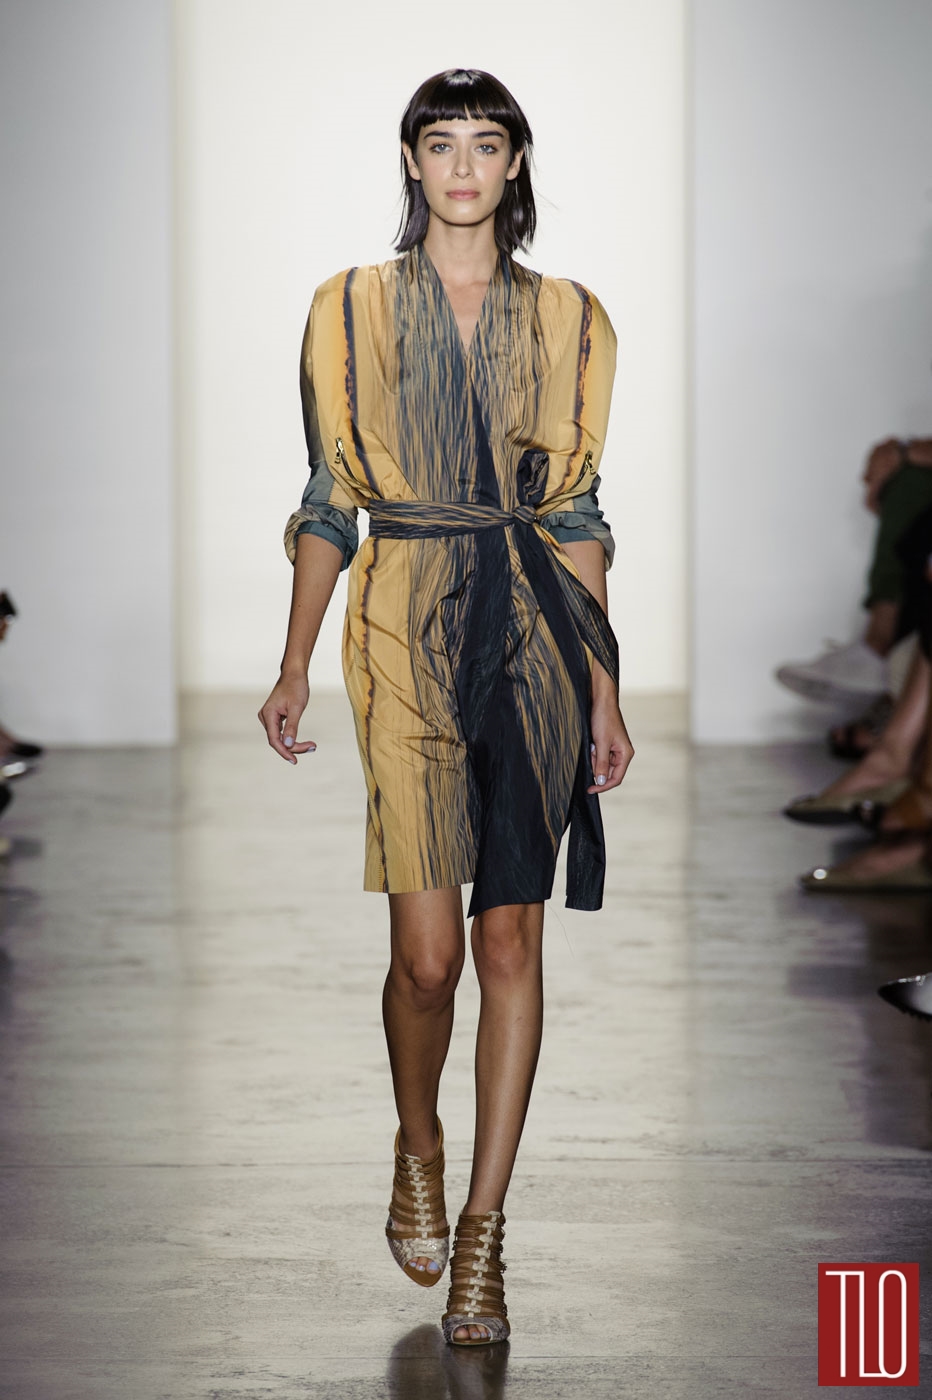 Costello-Tagliapietra-Spring-2015-Collection-Runway-Fashion-NYFW-Tom-Lorenzo-Site-TLO (1)